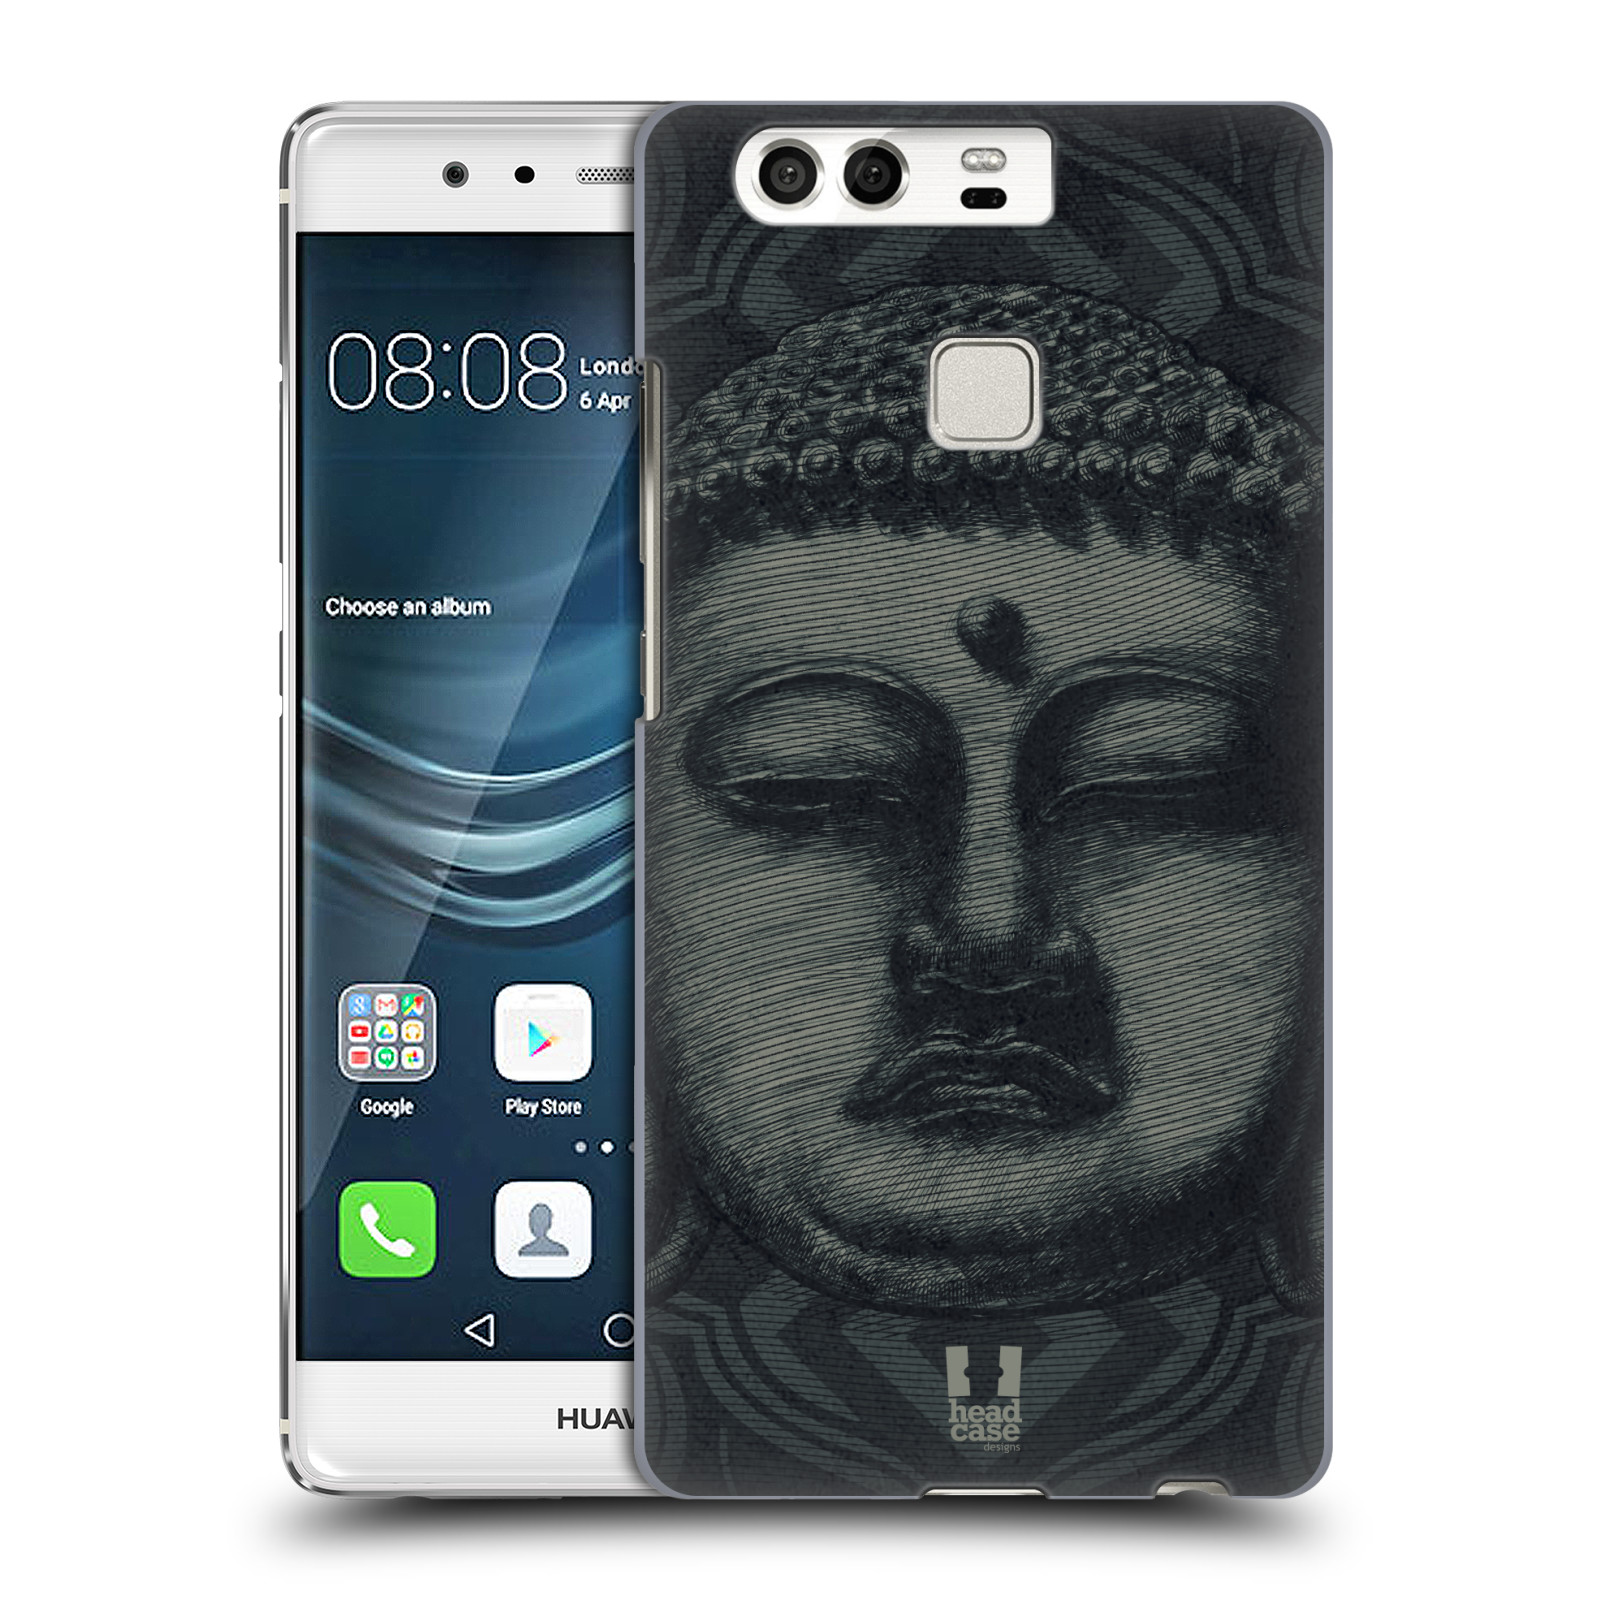 HEAD CASE plastový obal na mobil Huawei P9 / P9 DUAL SIM vzor BUDDHA KAMAKURA tvář